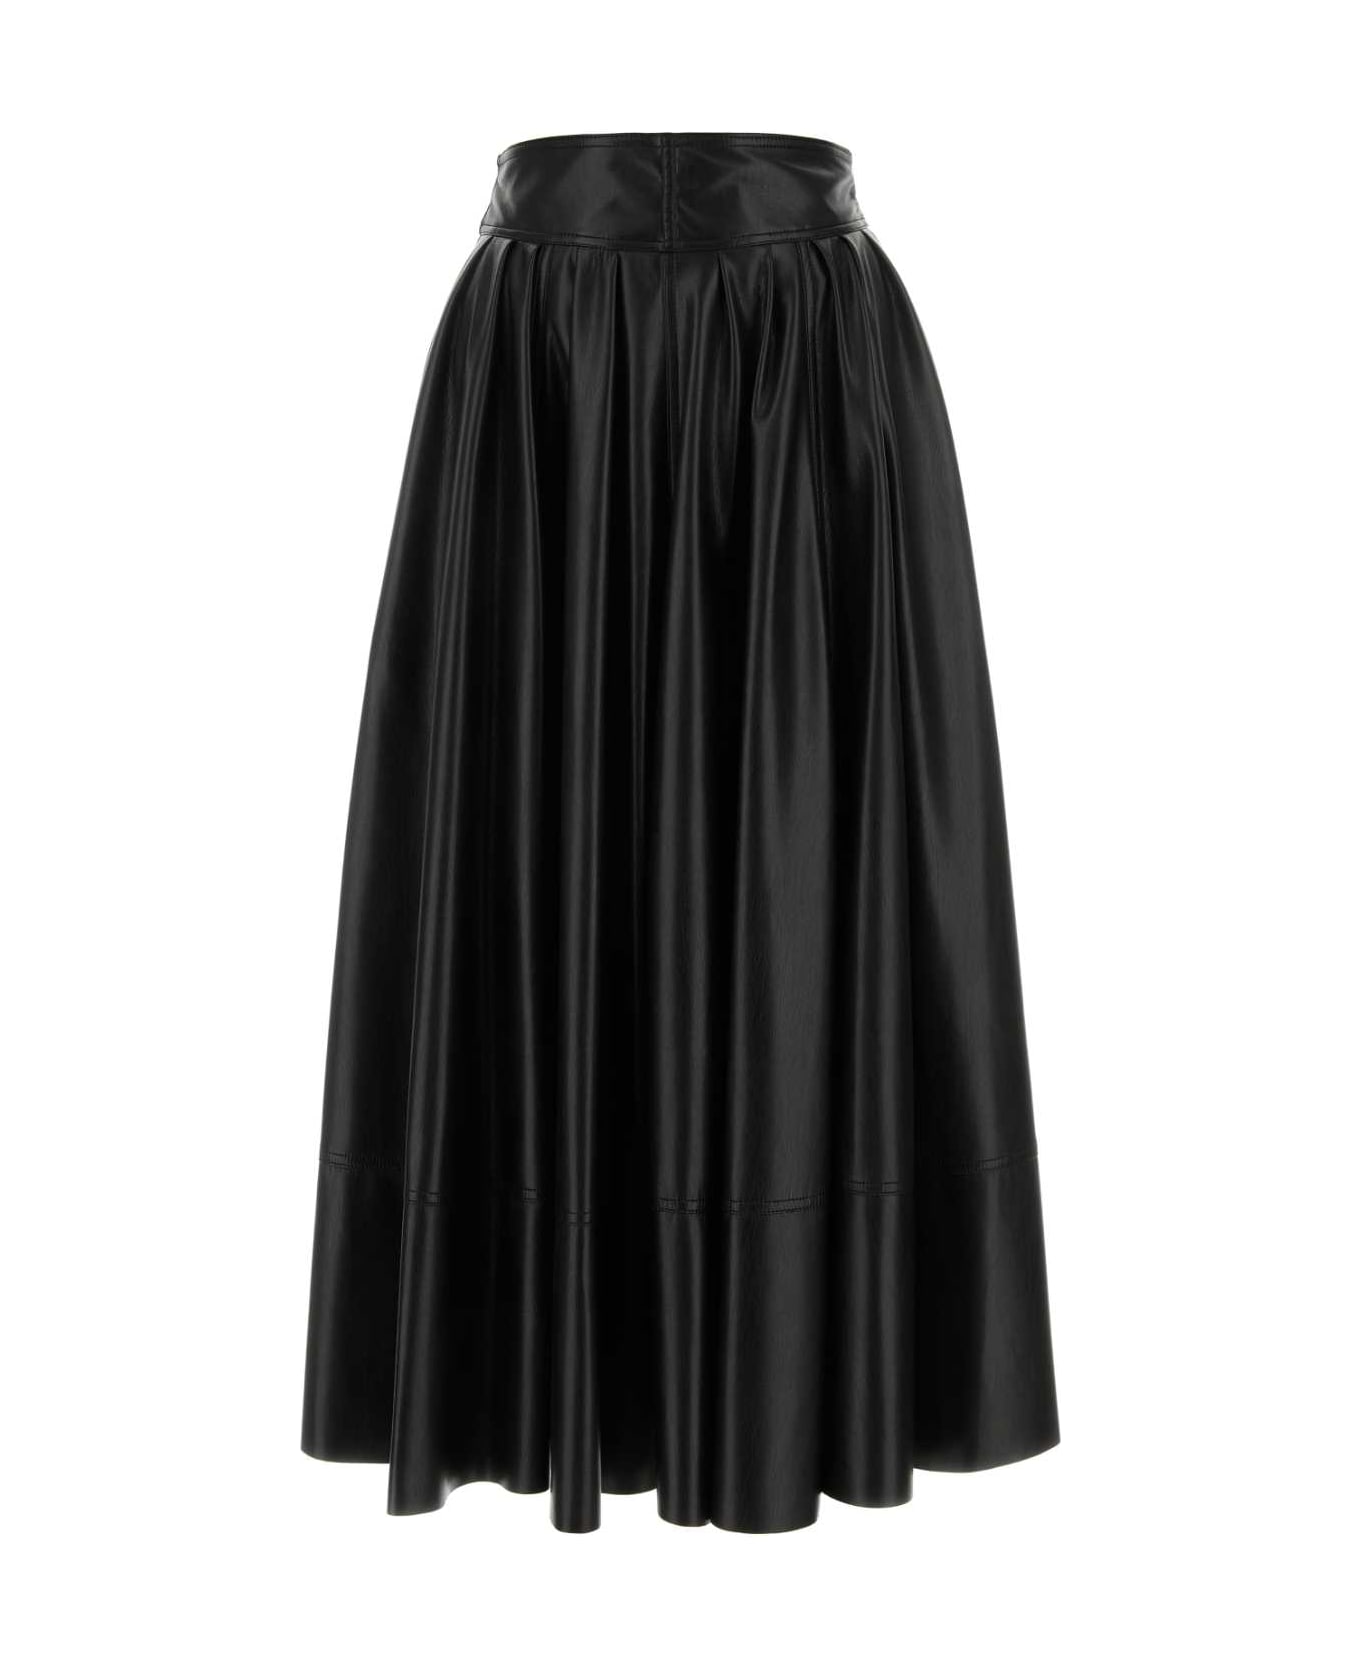 Philosophy di Lorenzo Serafini Black Synthetic Leather Skirt - NERO スカート